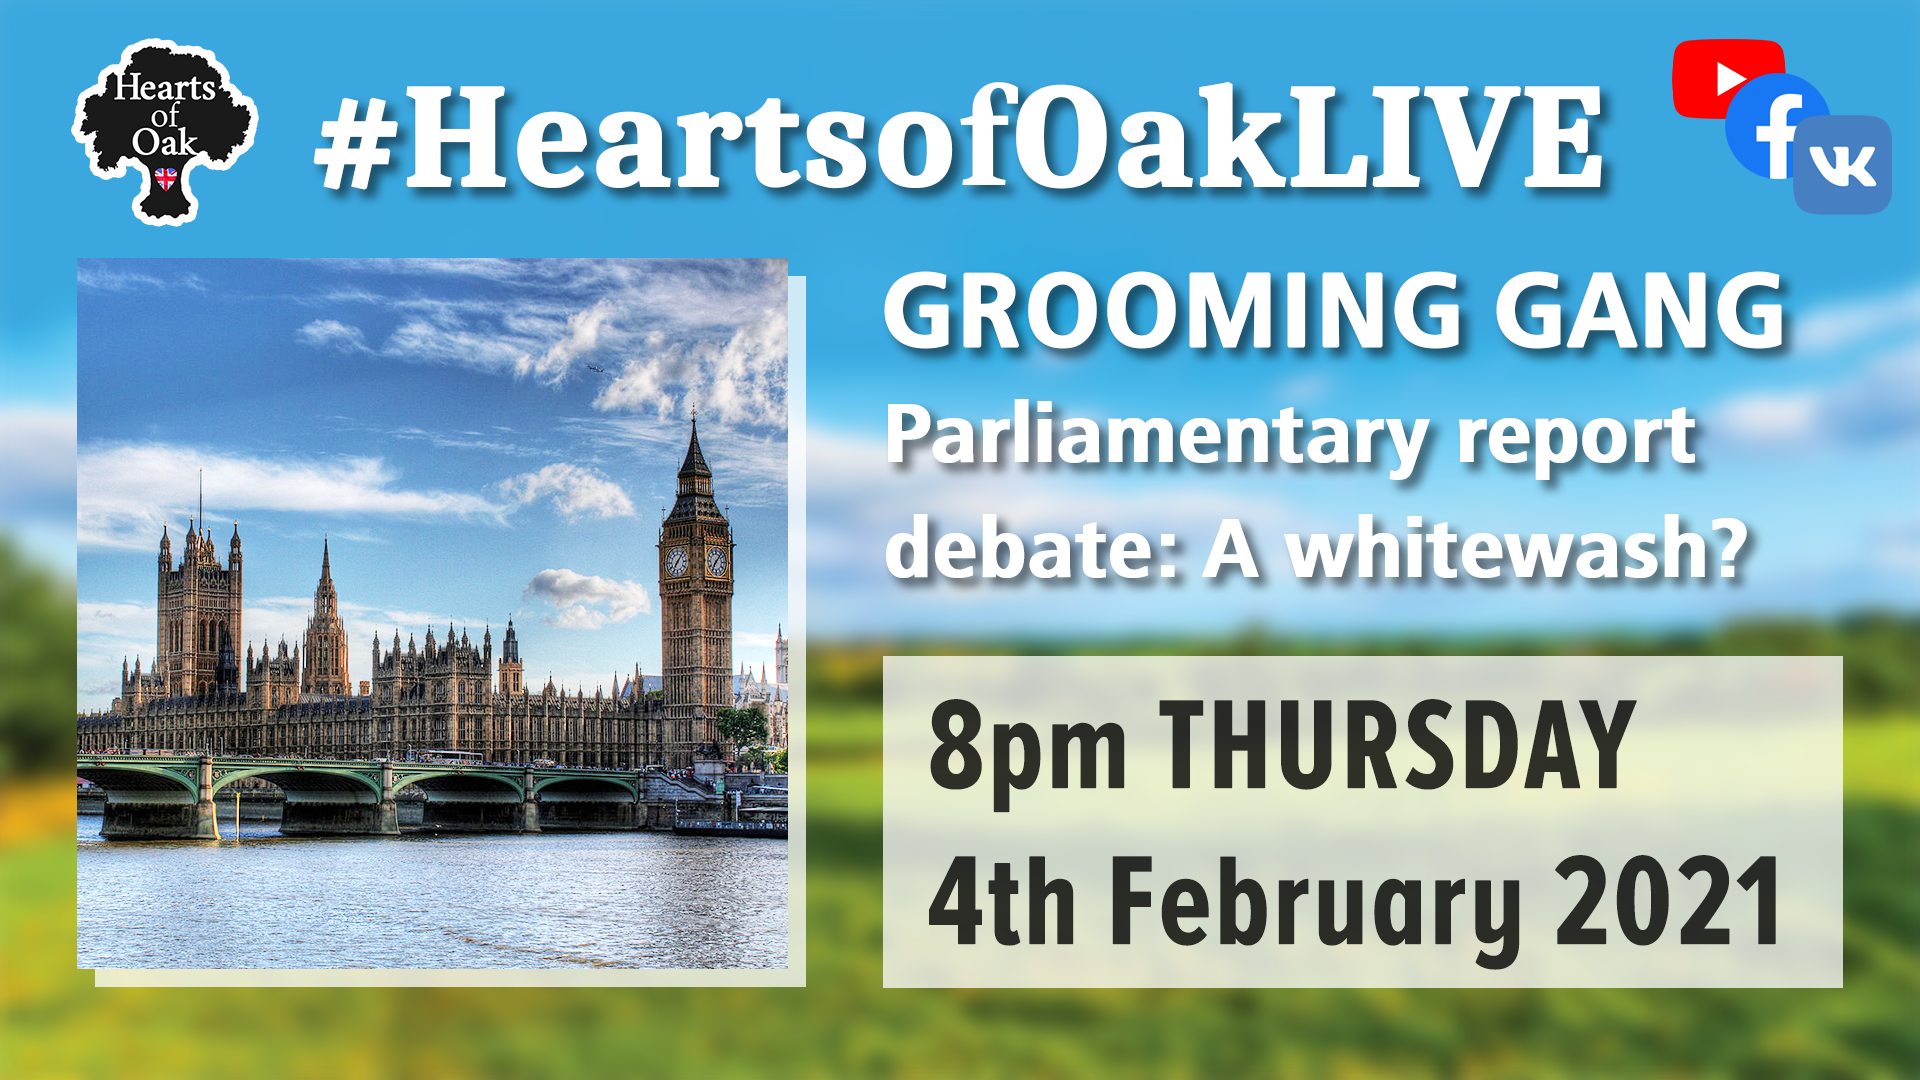 Grooming Gang Parliamentary report debate. A whitewash?